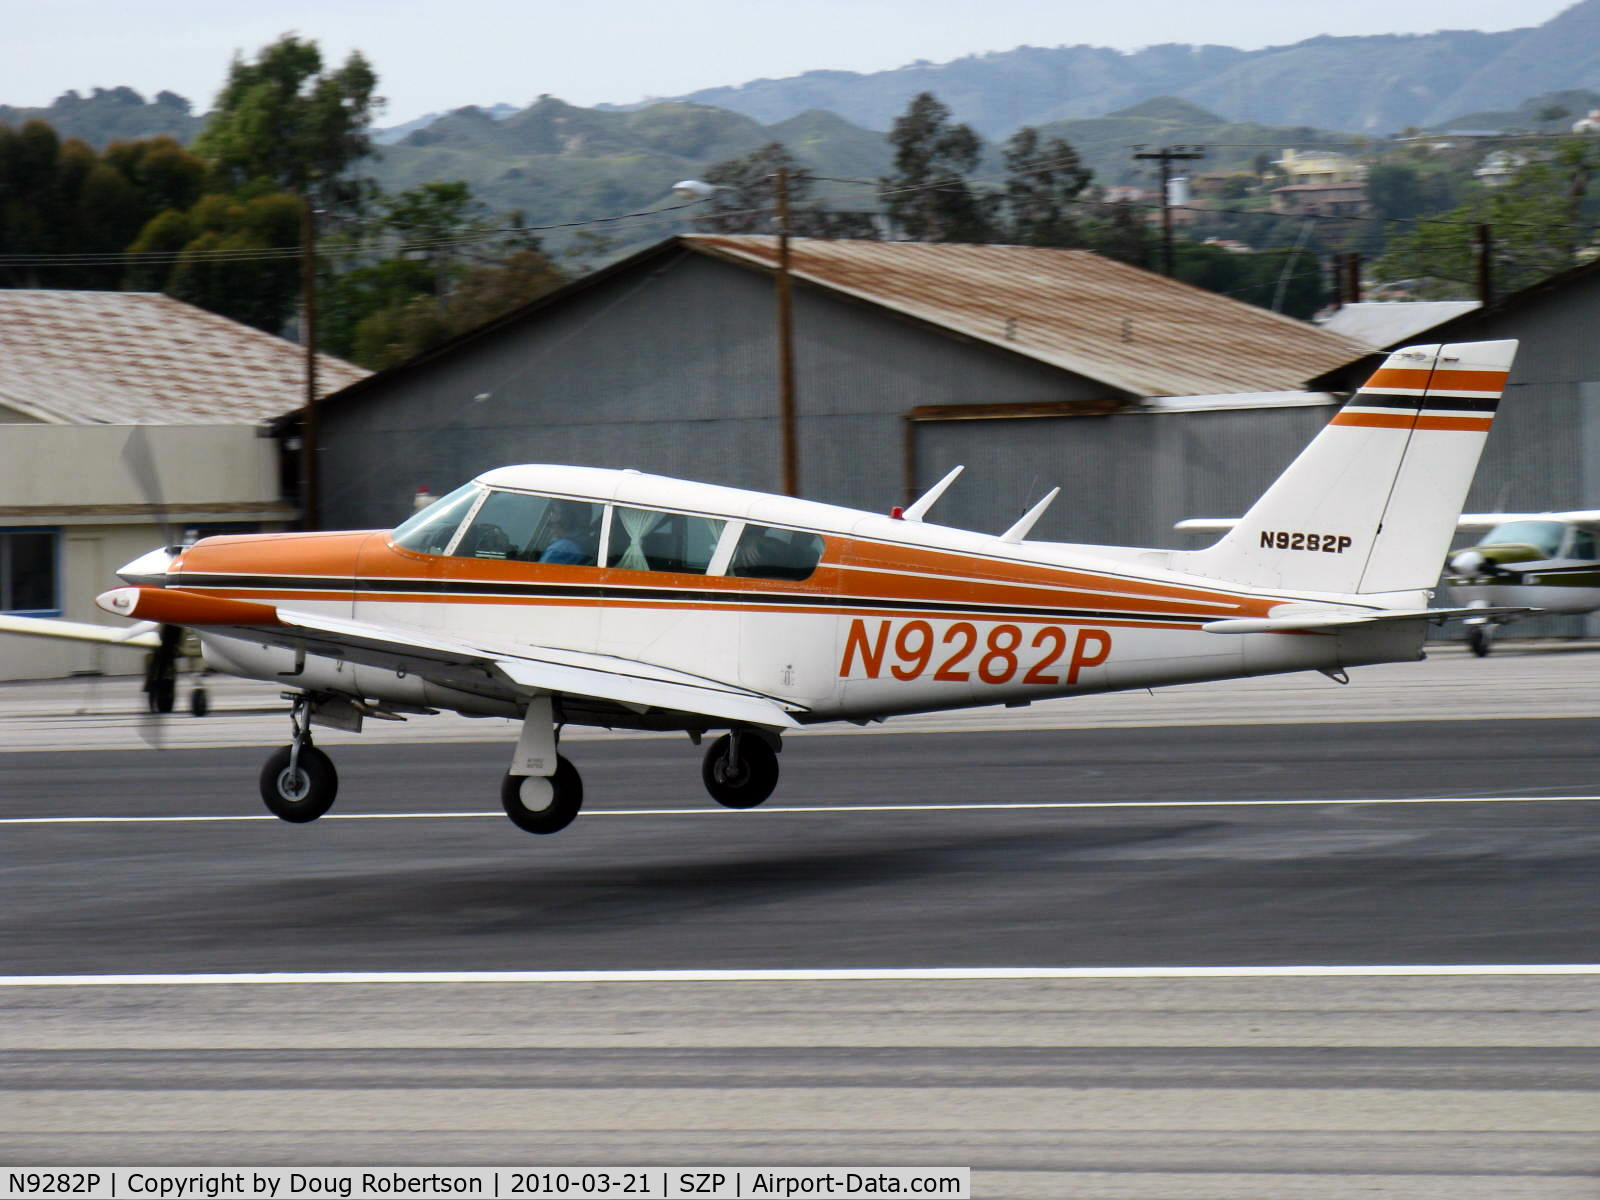 N9282P, 1968 Piper PA-24-260 C/N 24-4782, 1968 Piper PA-24-260 COMANCHE, Lycoming IO-540-D4A5 260 Hp, Experimental class, landing Rwy 22